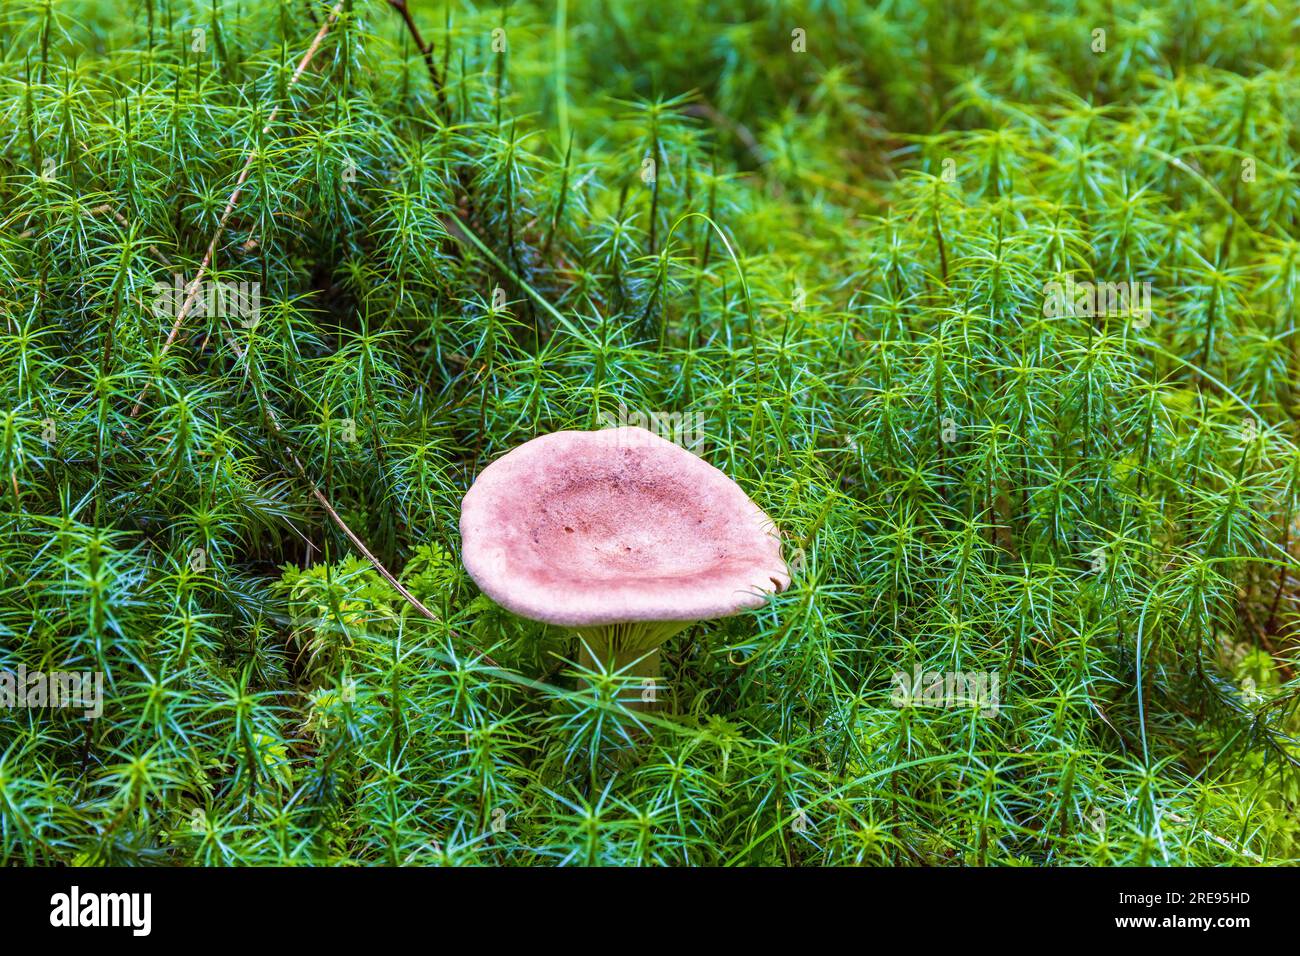 Mushroom growing in green haircap moss Stock Photo